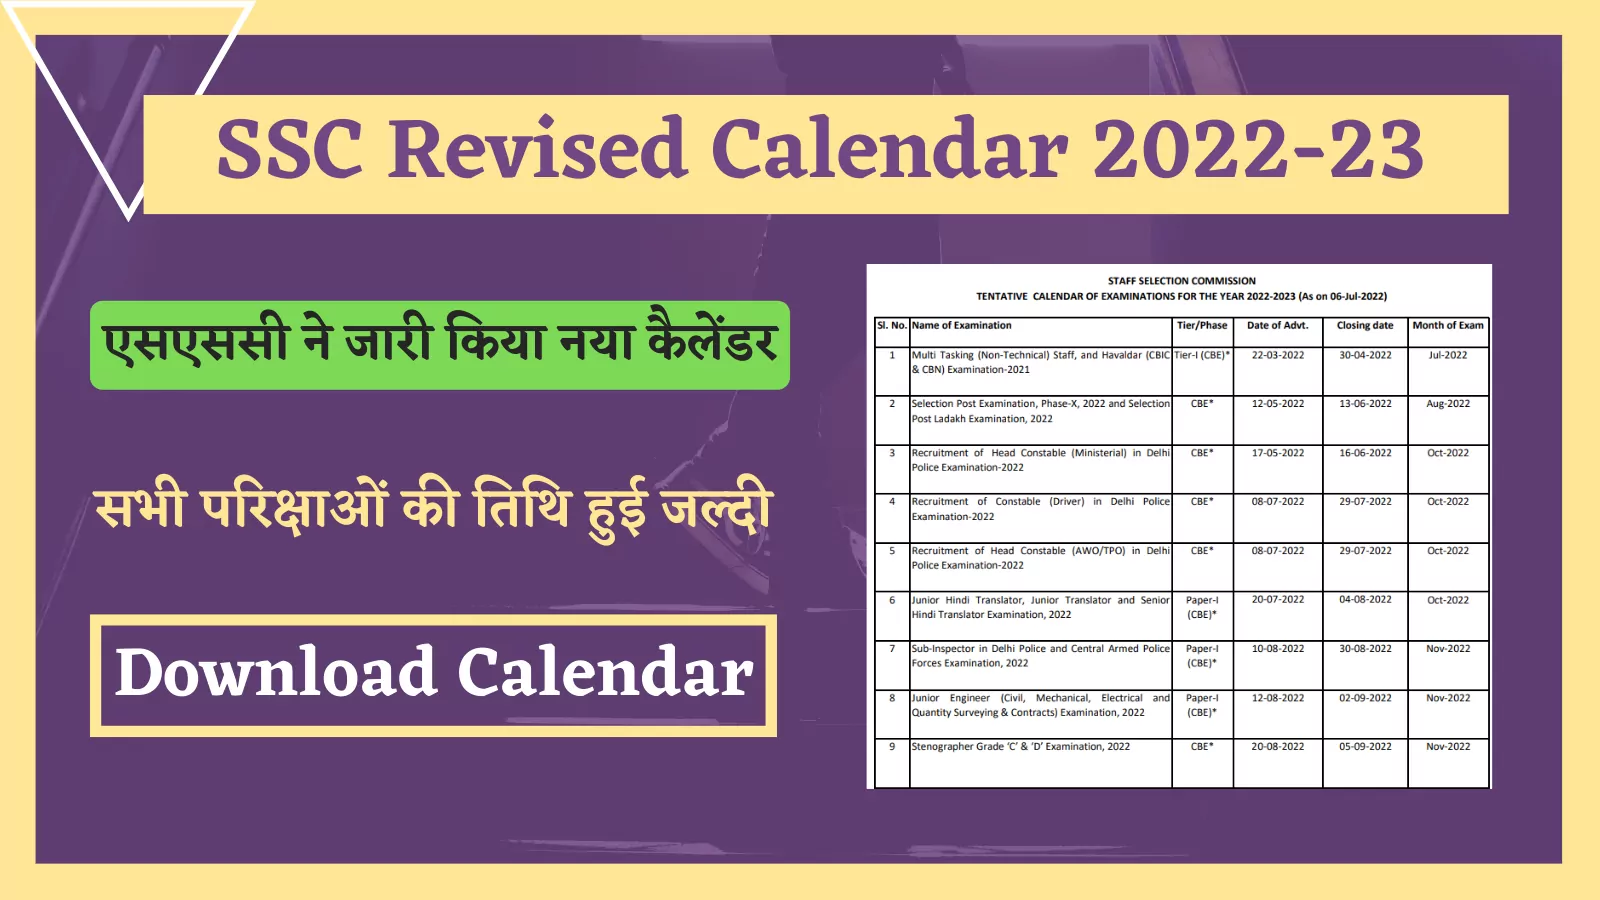 ssc revised calendar 2022-23 released